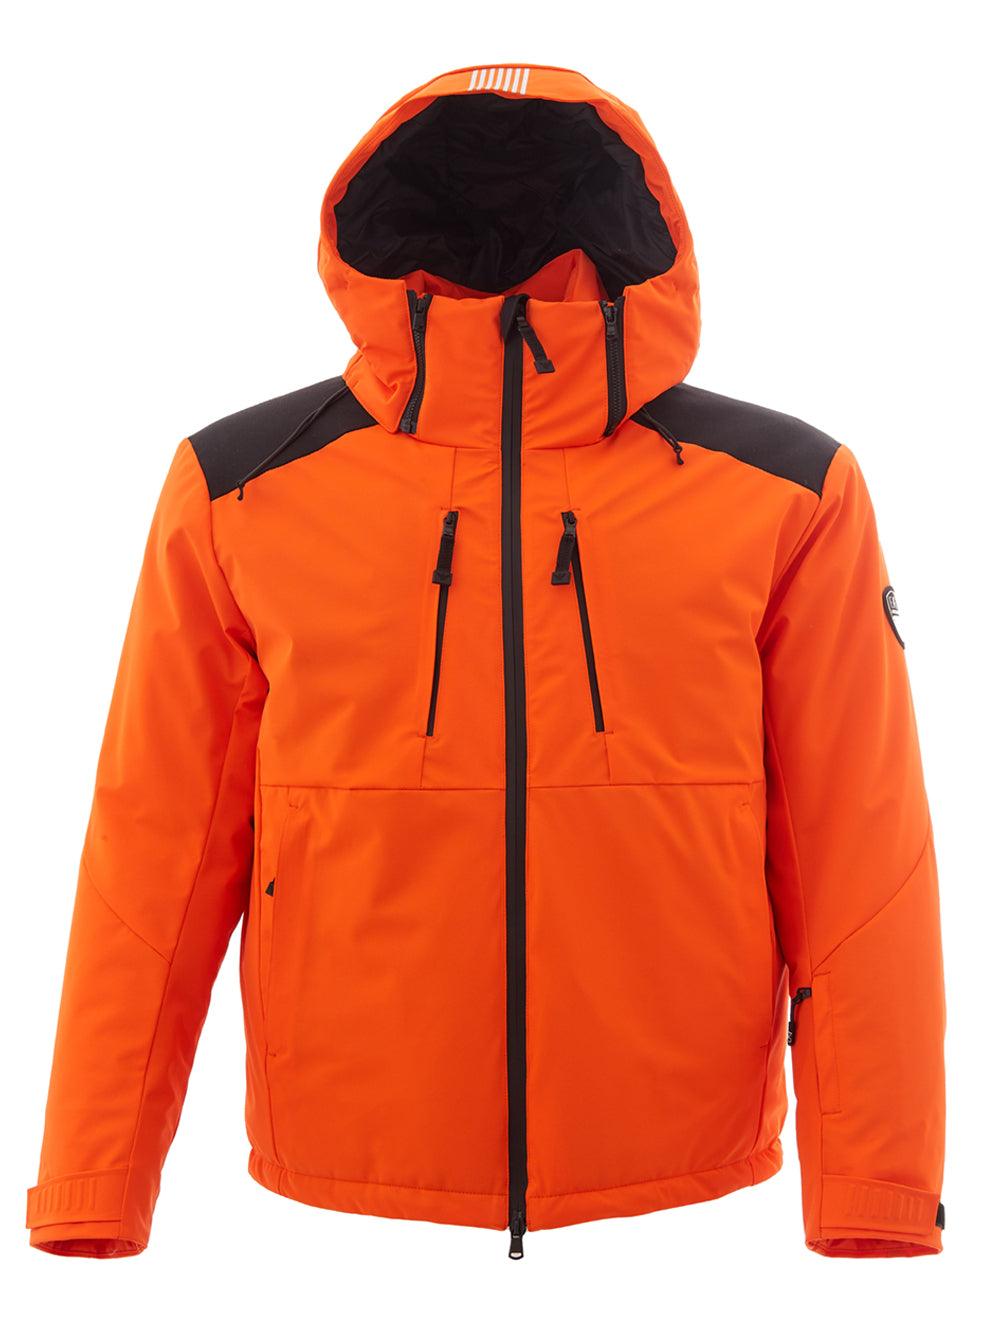 EA7 Emporio Armani Orange Winter Jacket with Removable Sleeveless vest - Ellie Belle